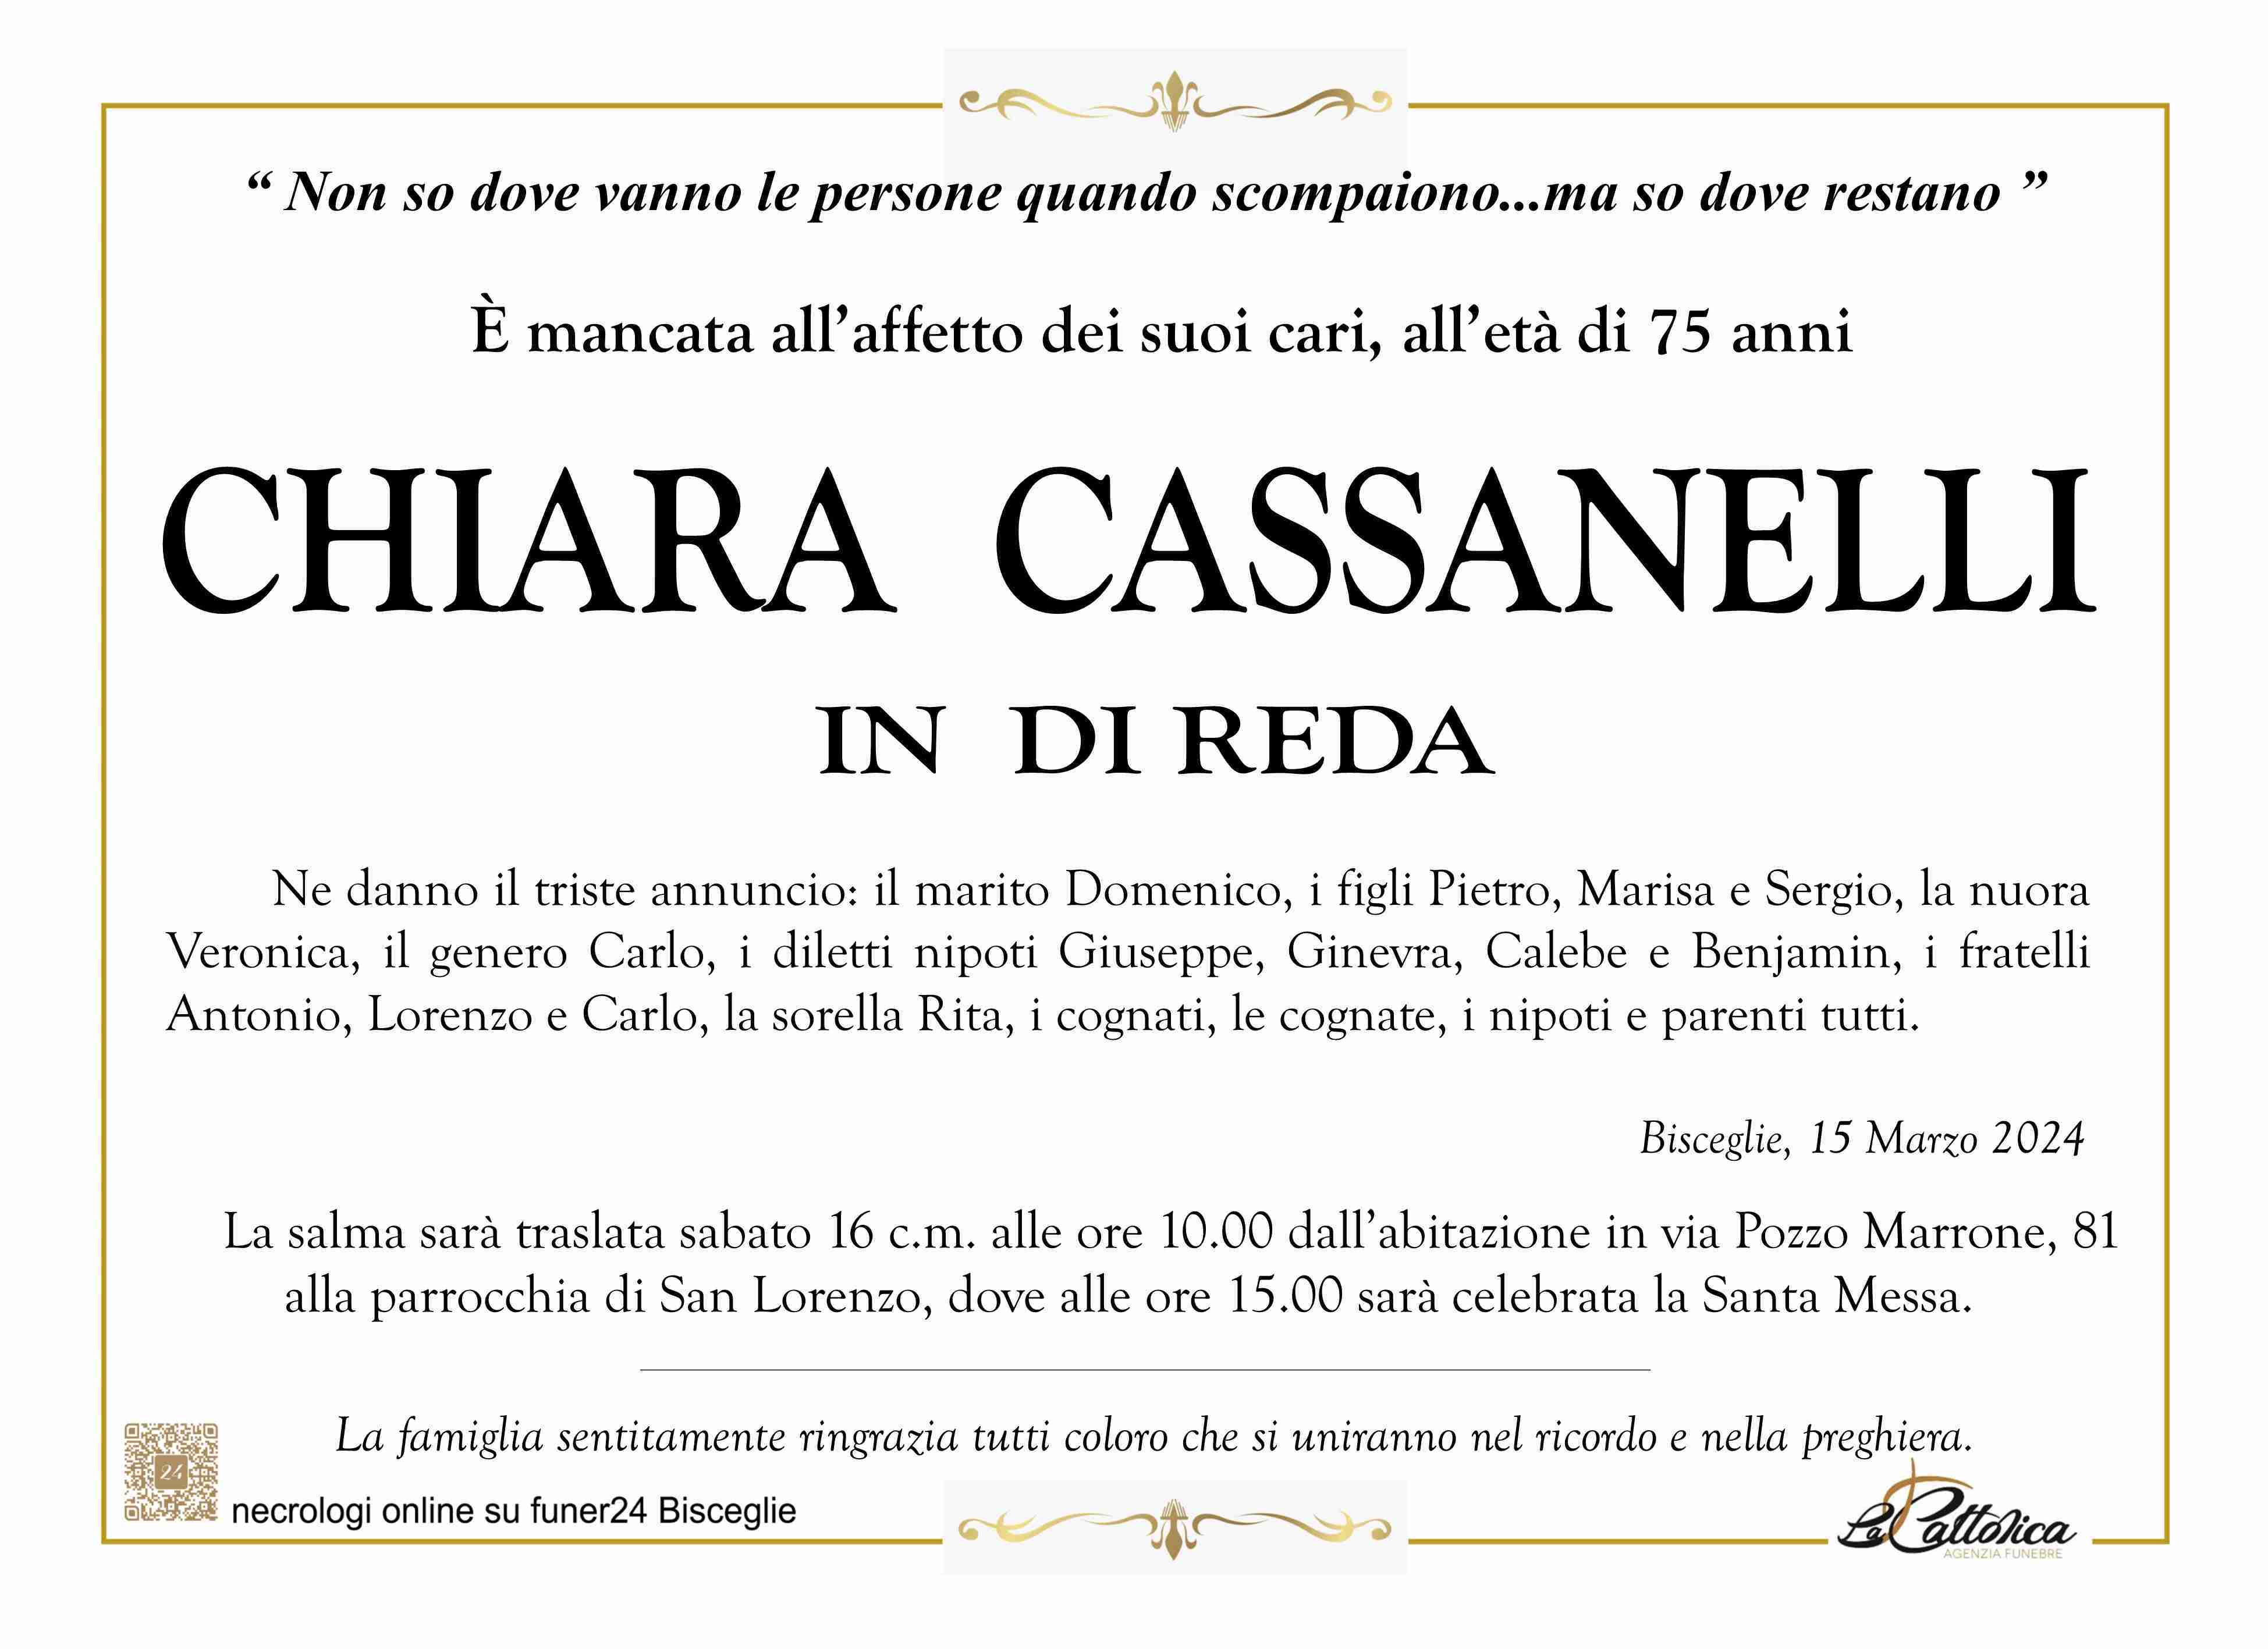 Chiara Cassanelli